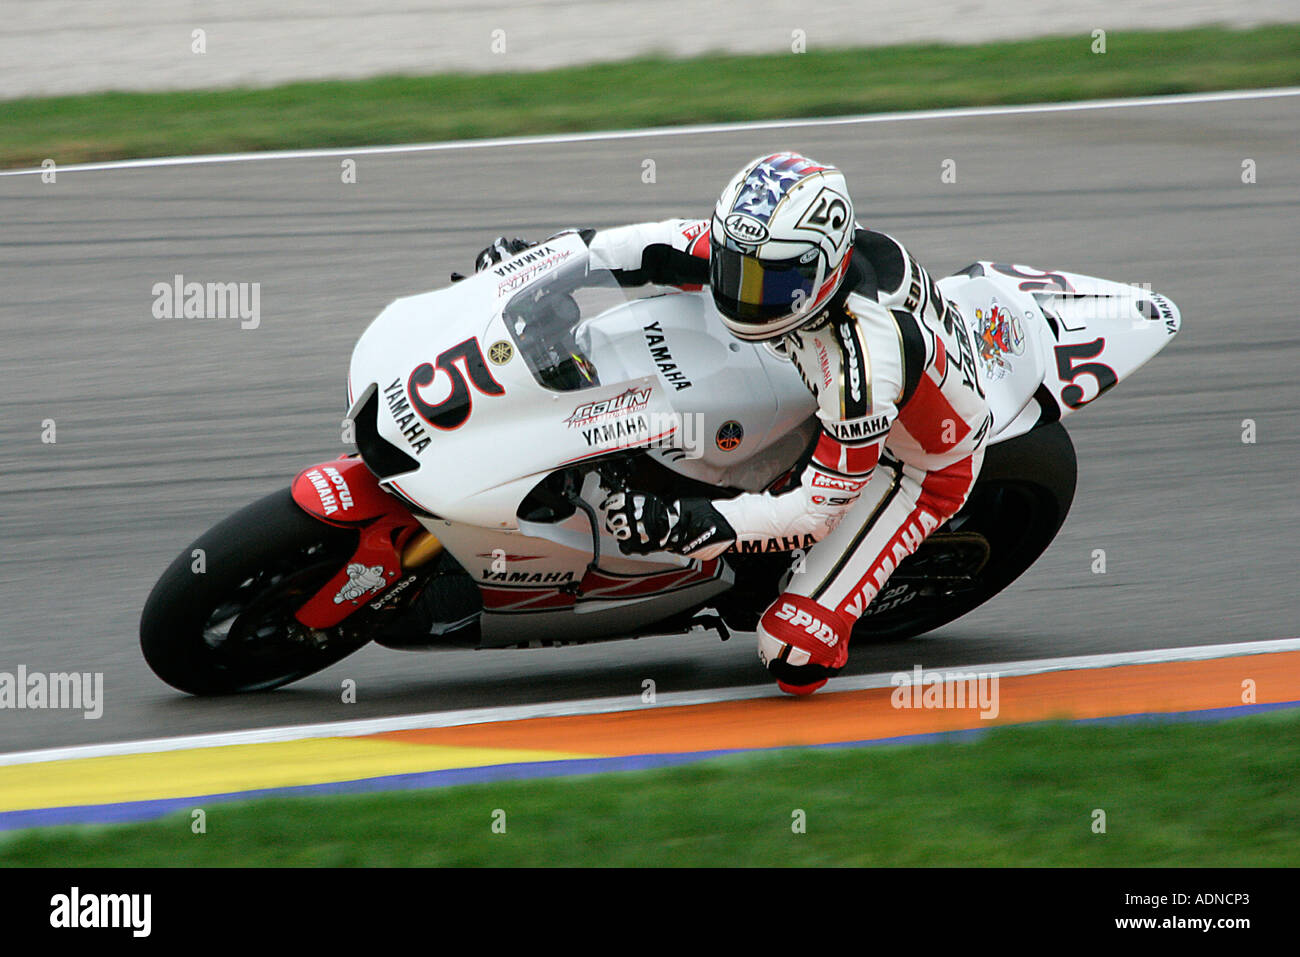 Colin Edwards riding for Yamaha team in 2005 Moto GP championship at Valencia Stock Photo